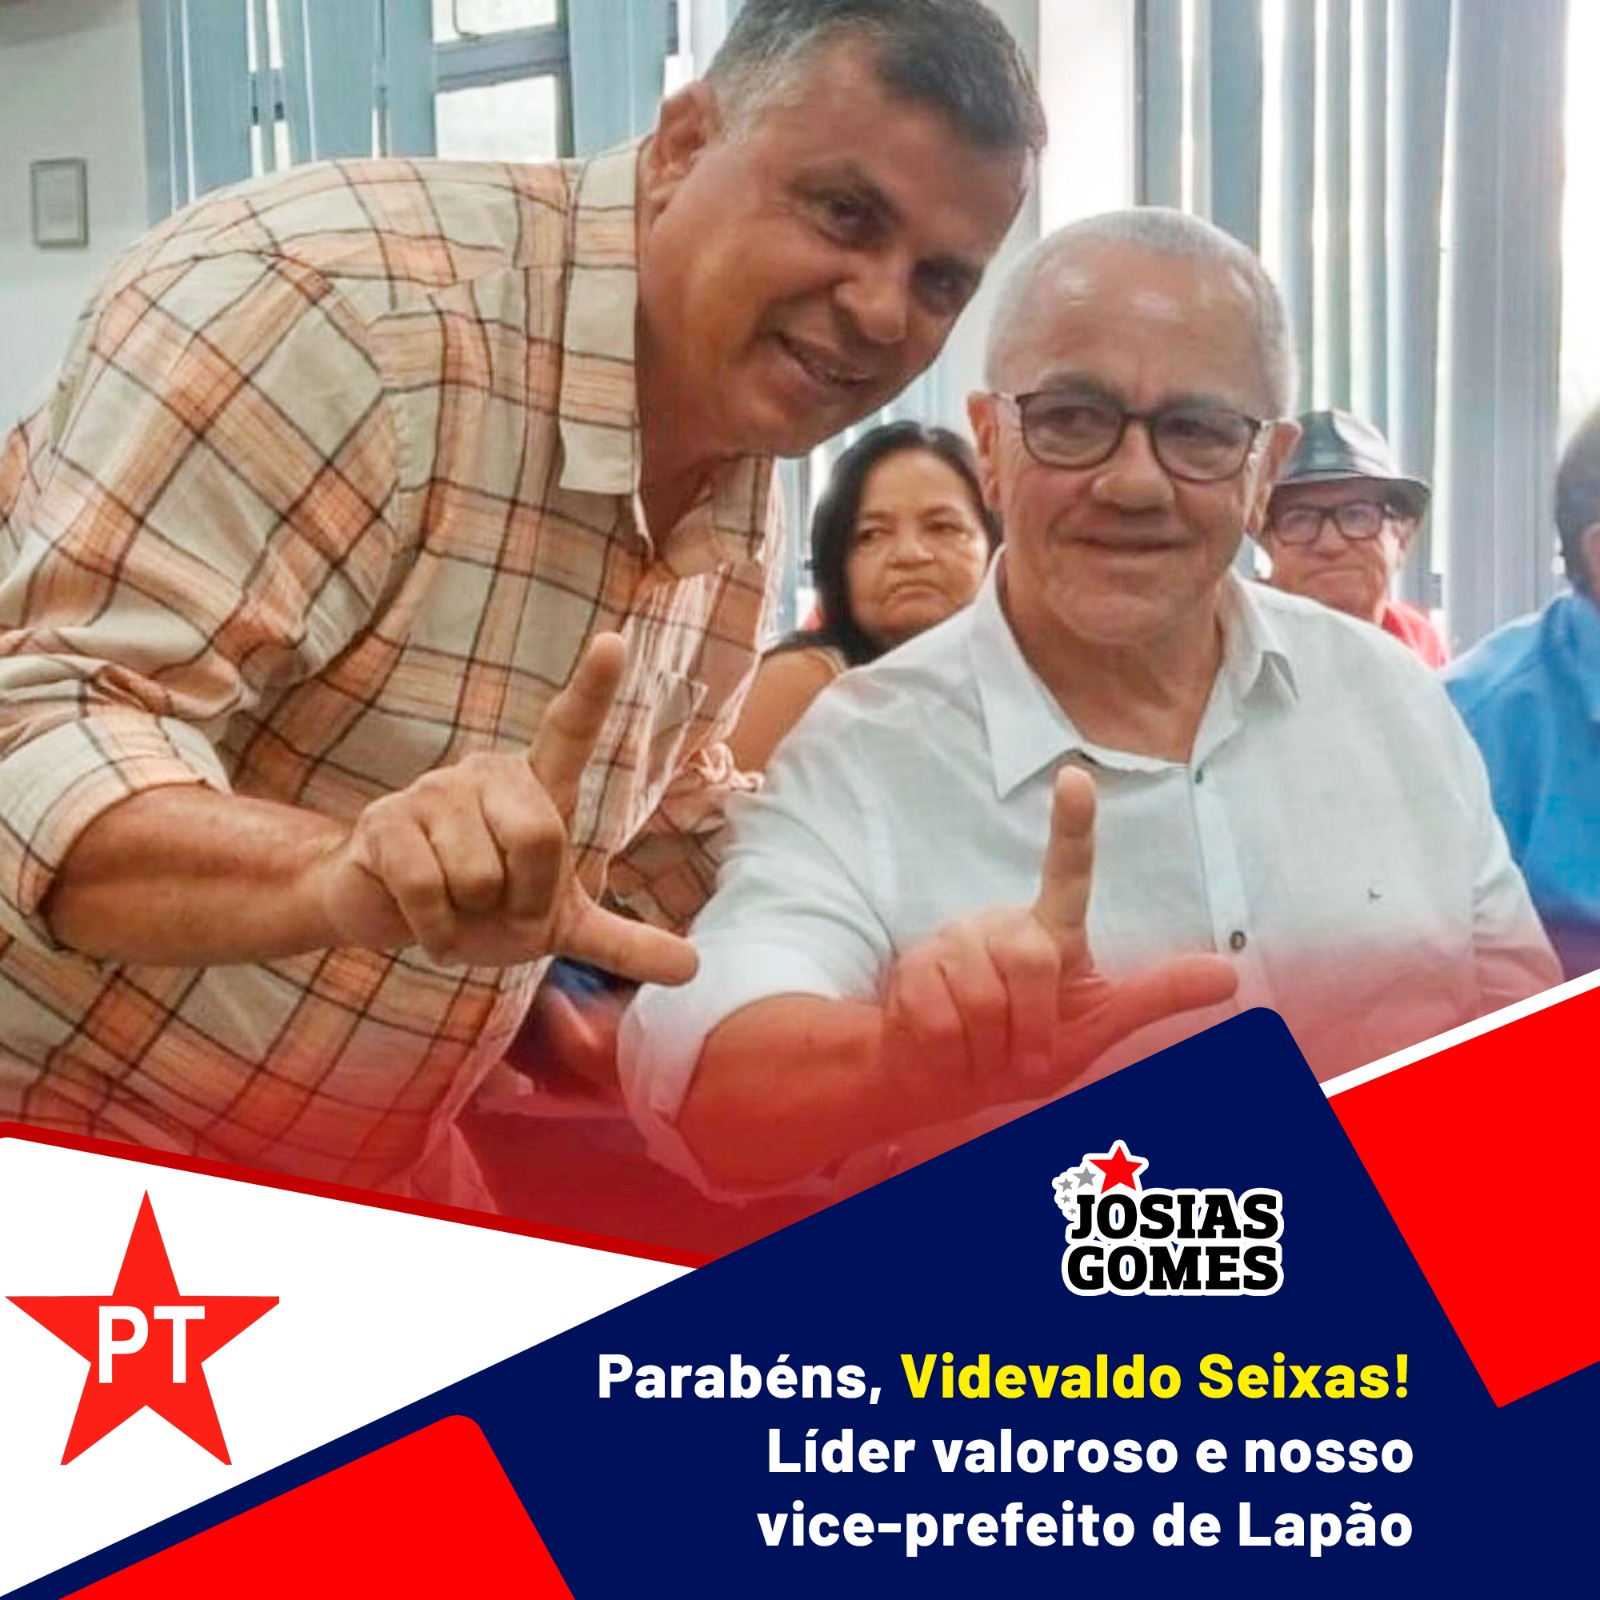 Feliz Aniversário, Vice-prefeito Videvaldo Seixas!